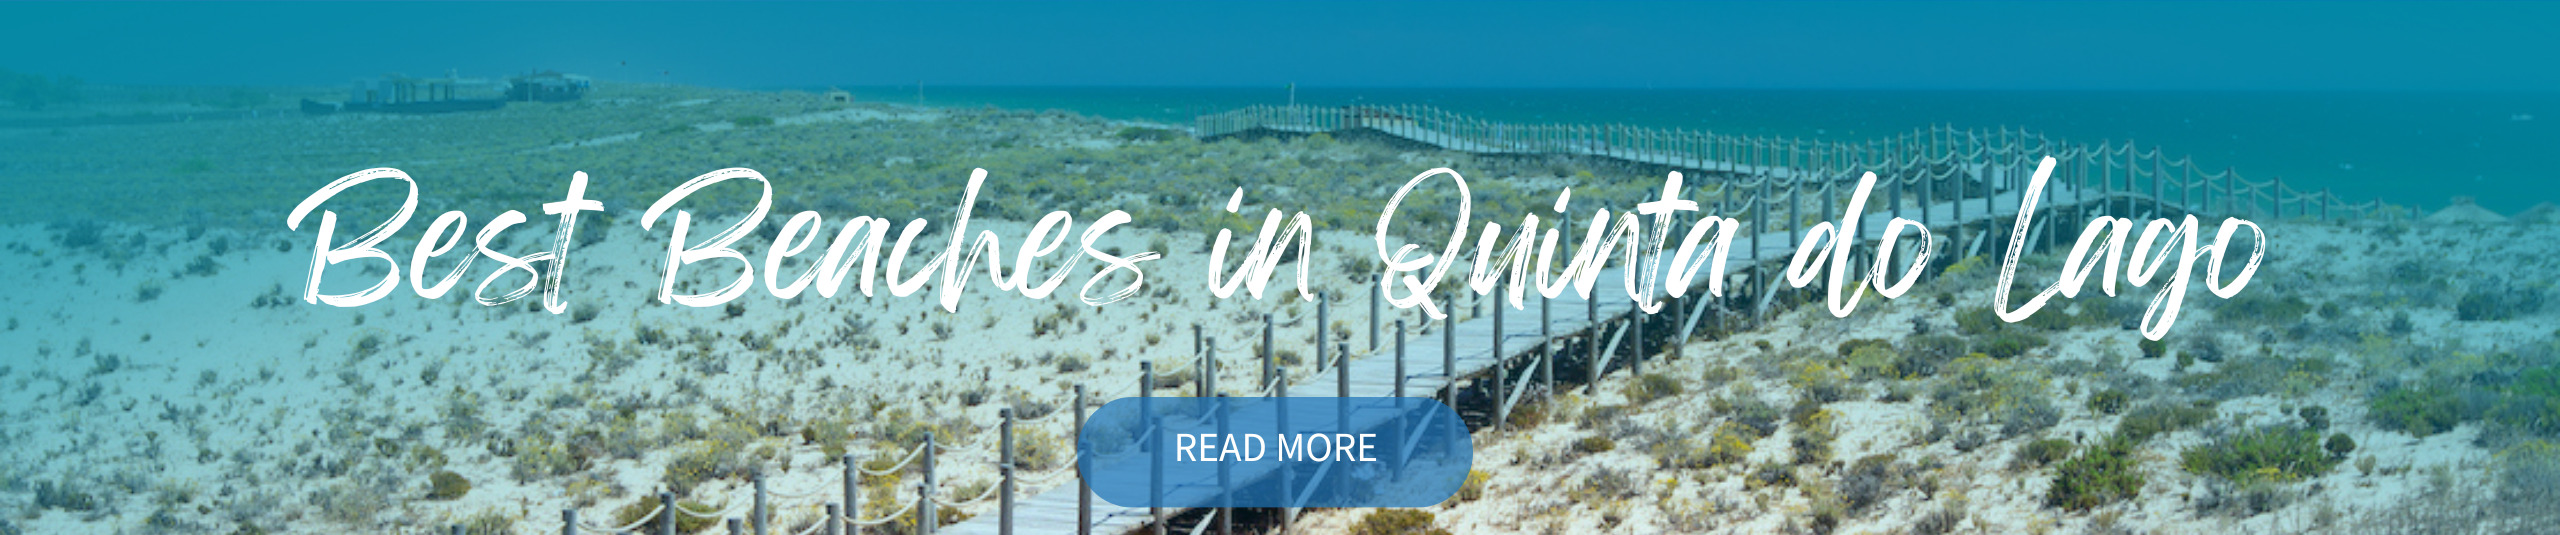 Best Beaches in Quinta do Lago CTA Blog Web banner